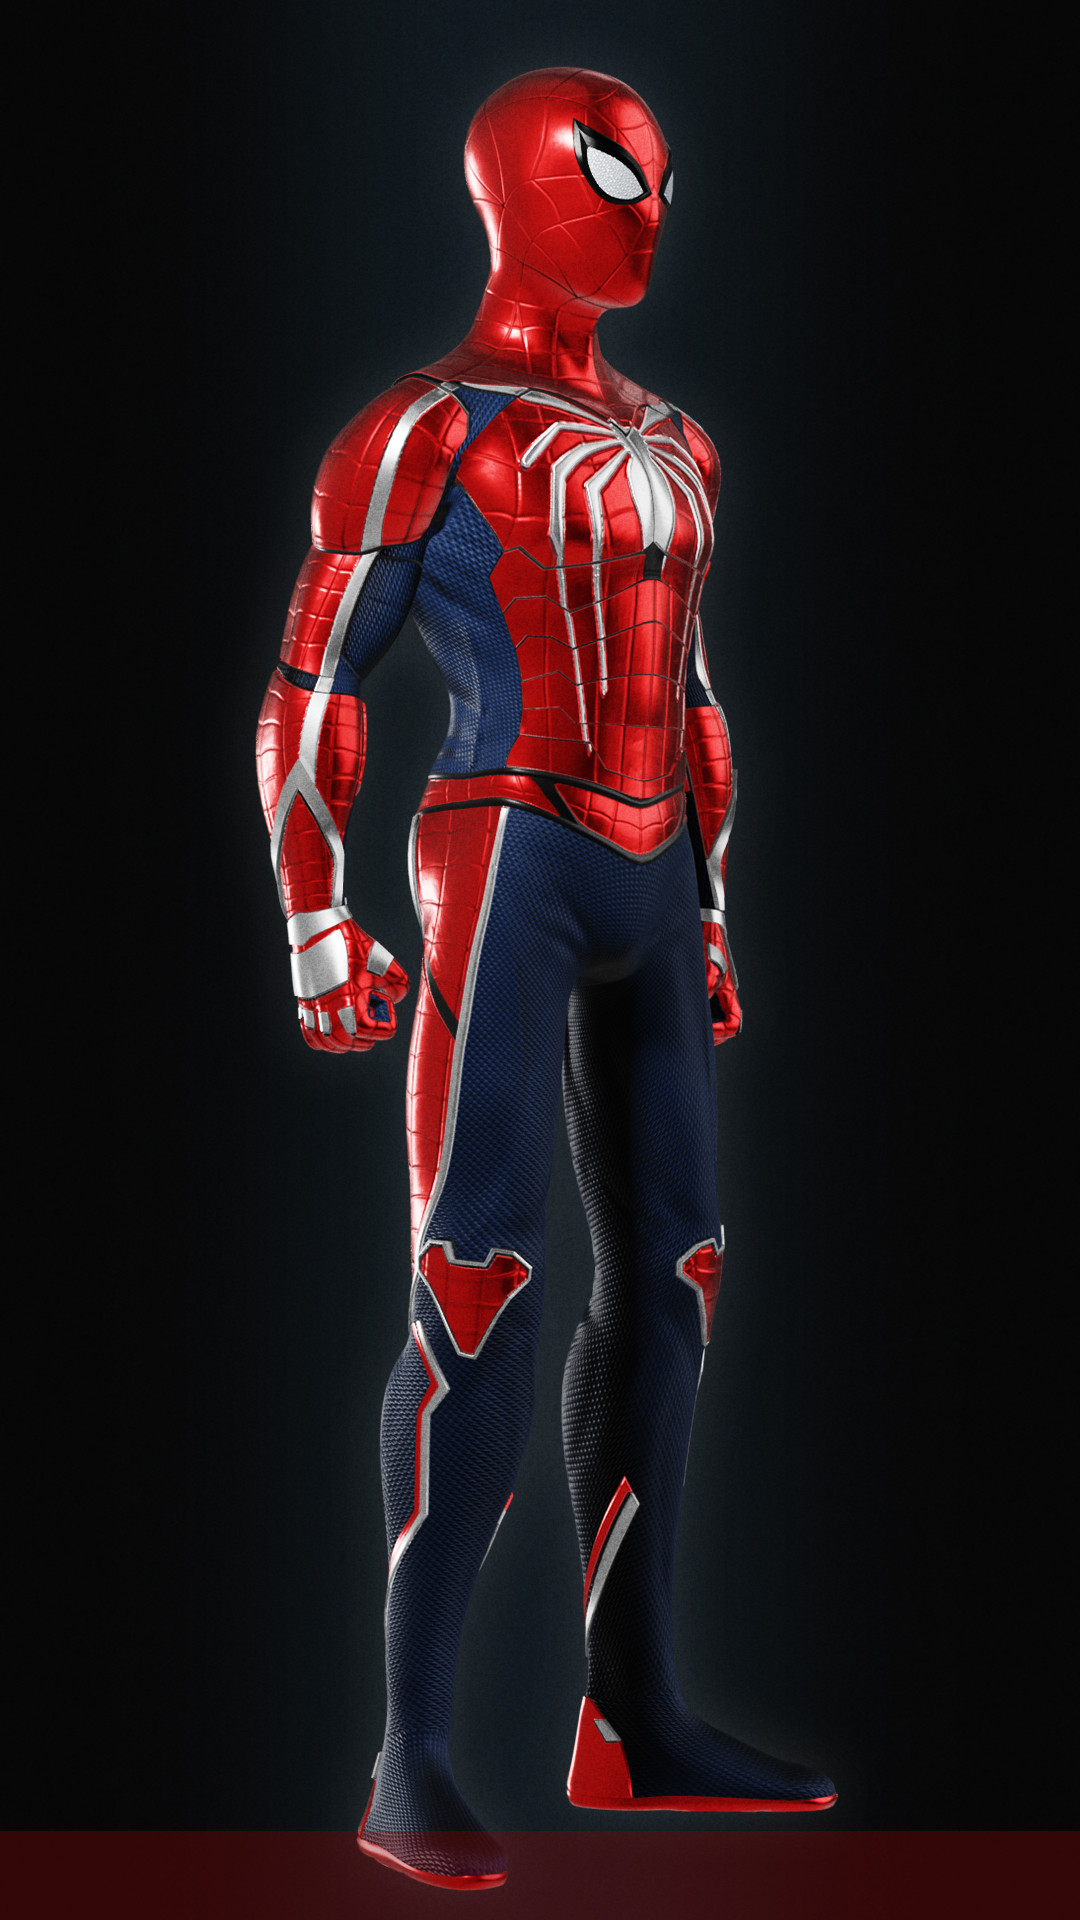 ArtStation Spiderman Custom Suit design 3D character asset Resources